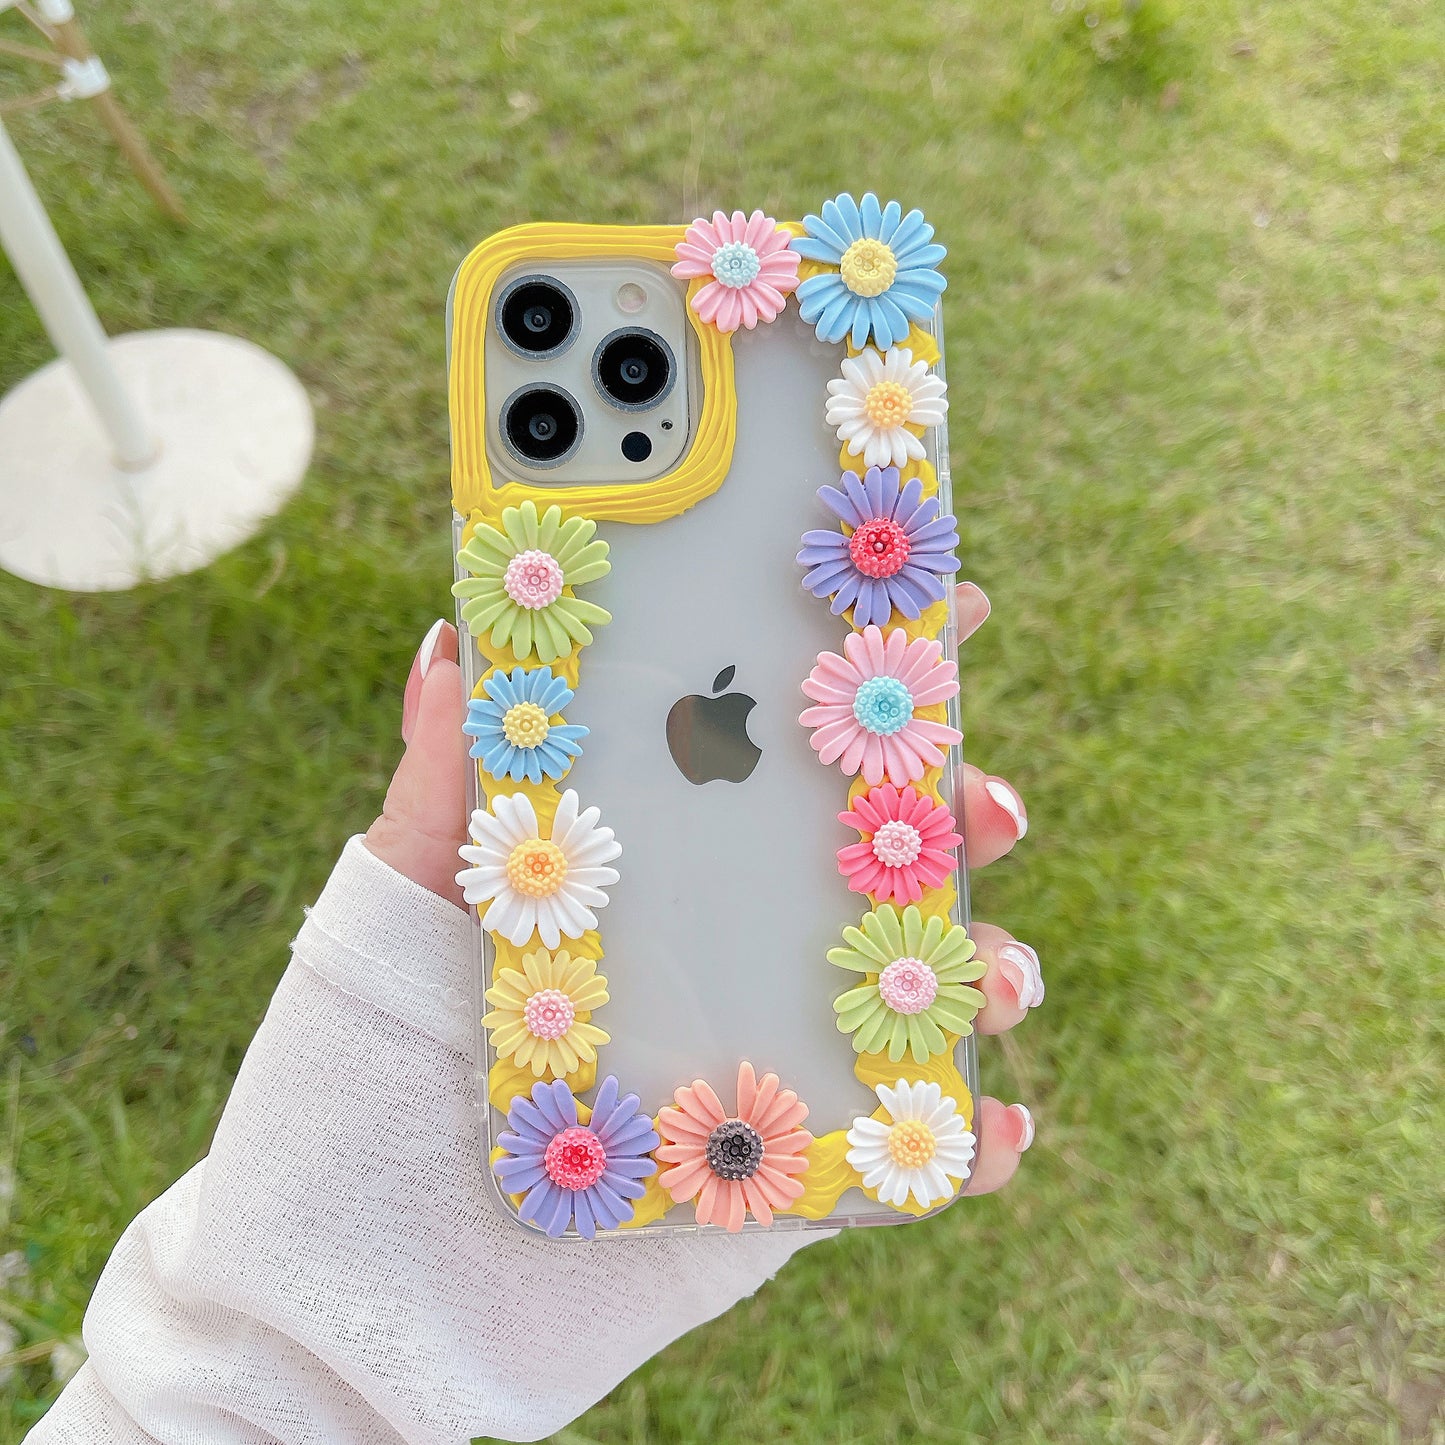 Handmade Phone Cases Cream Gel  3D Flowers and Christmas Trees,iPhoneX-14Promax.